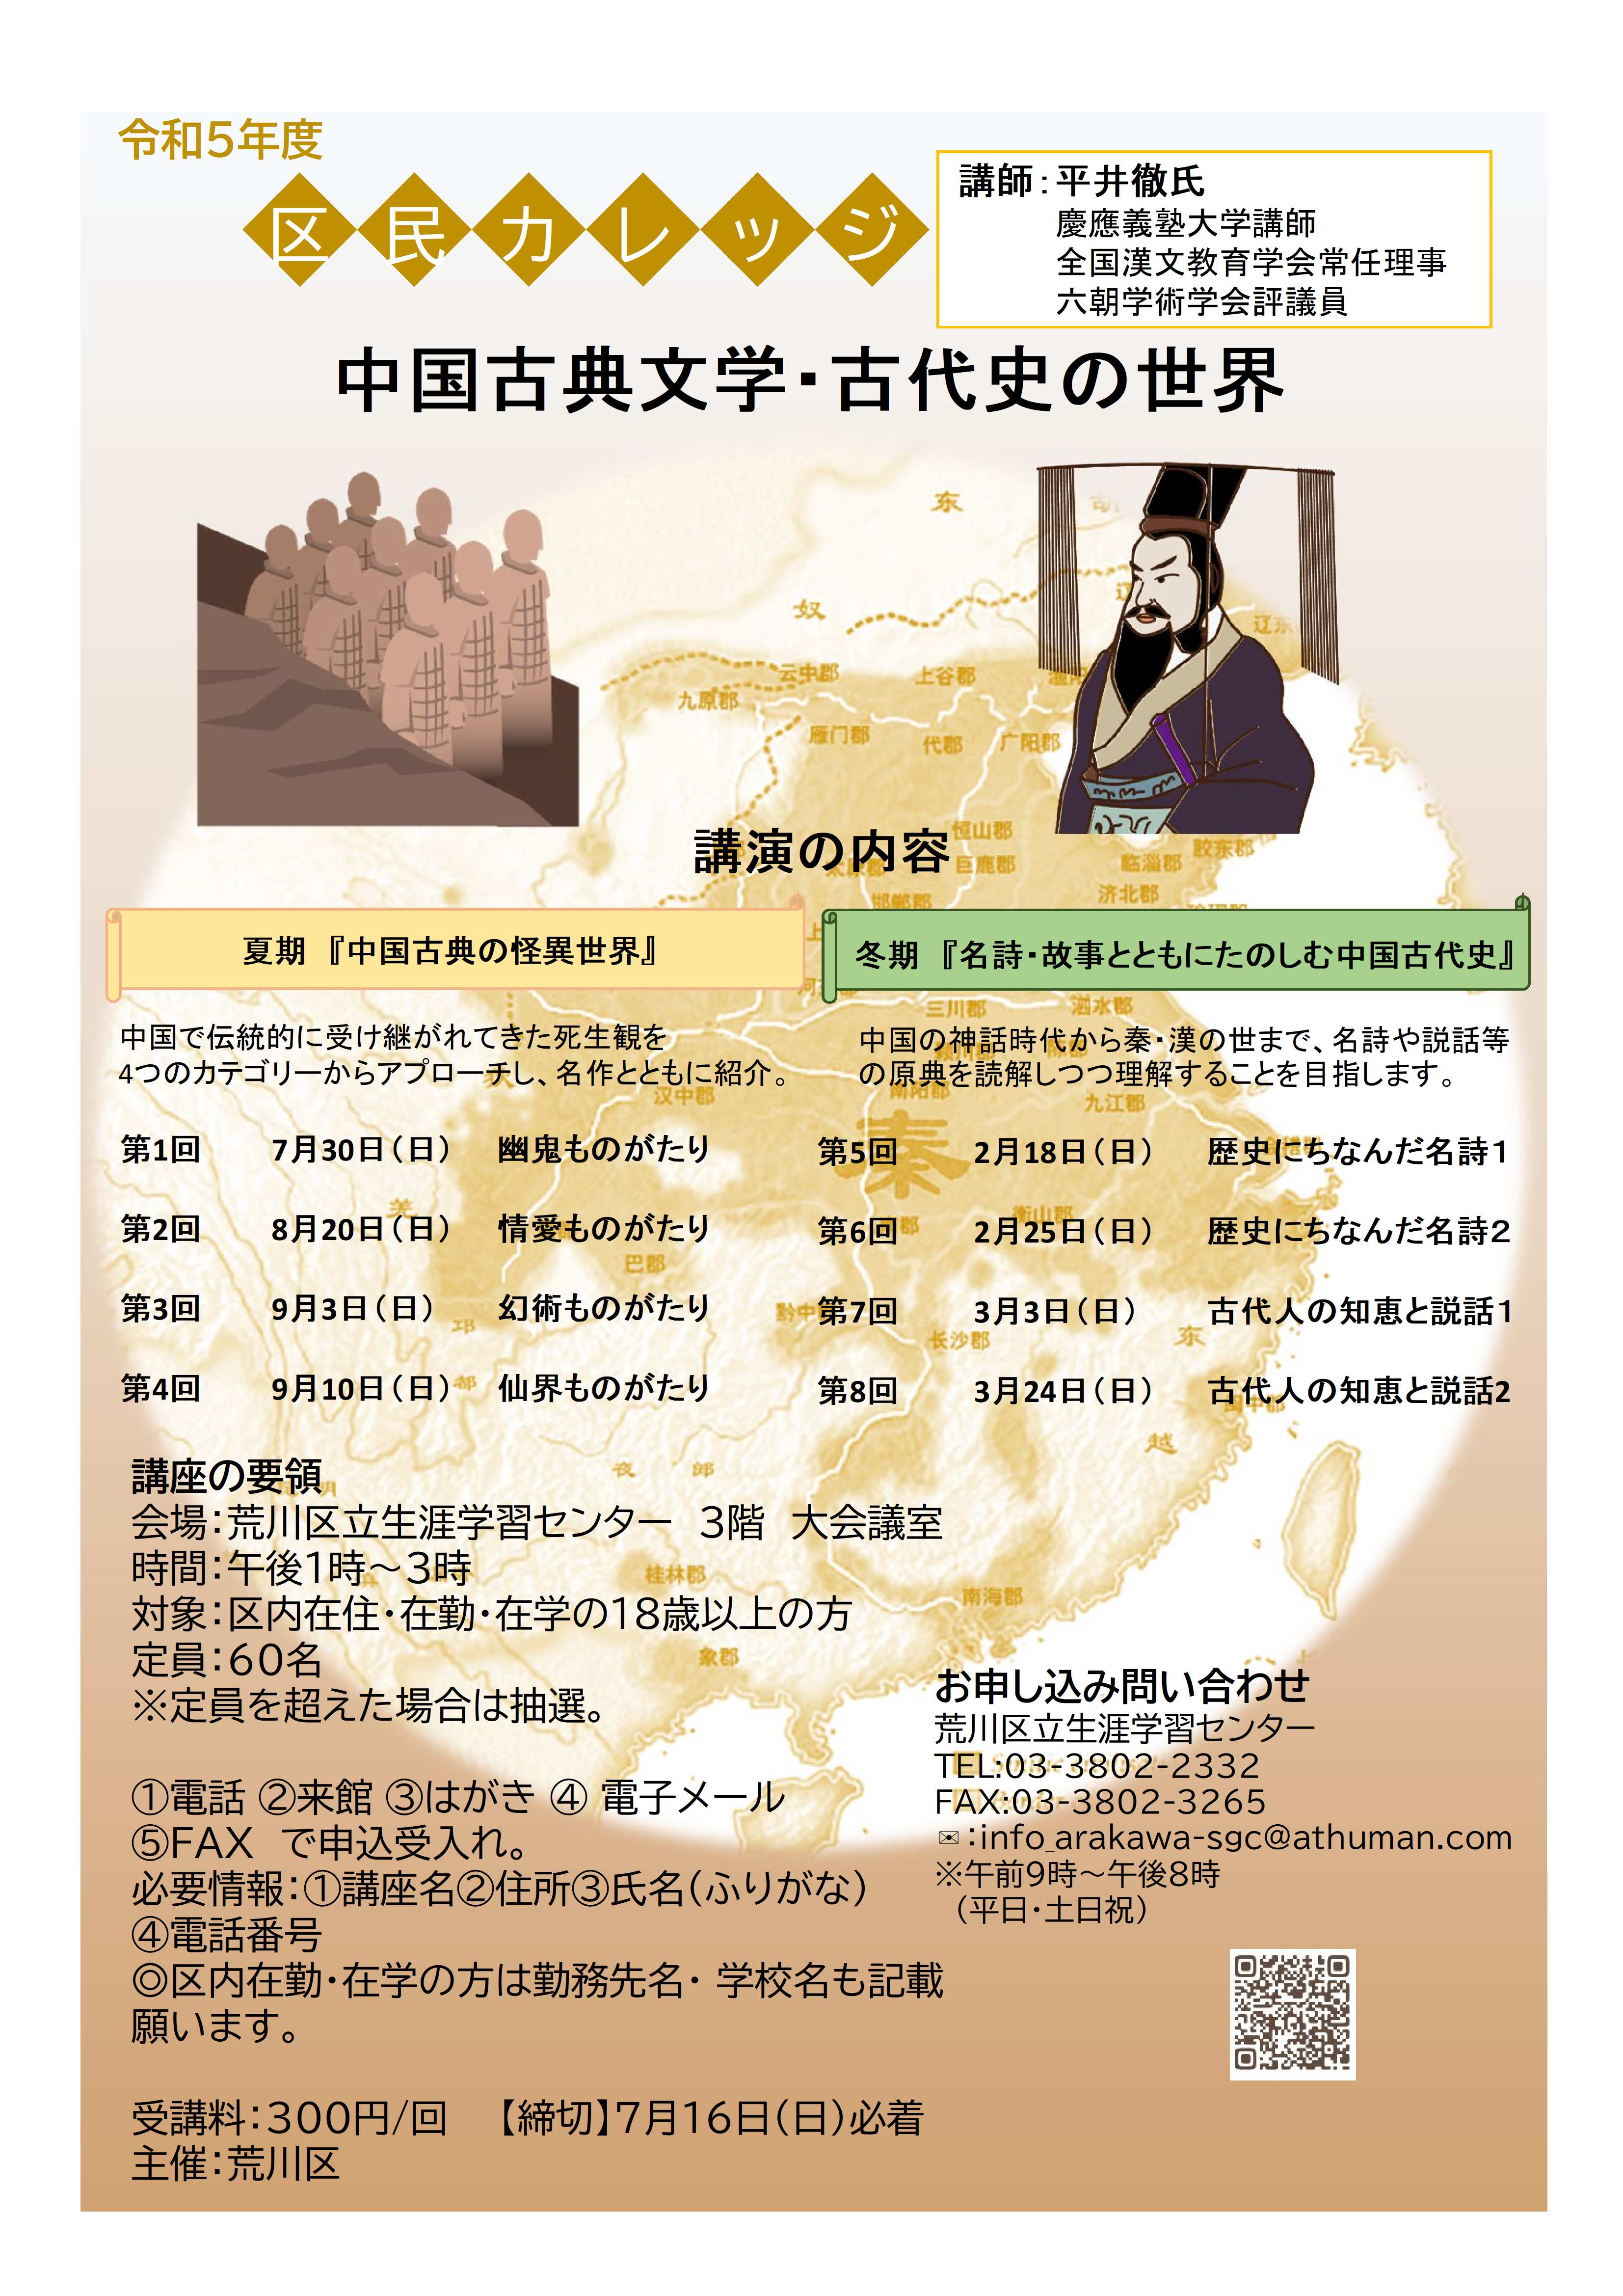 区民カレッジ「中国古典文学・古代史の世界」